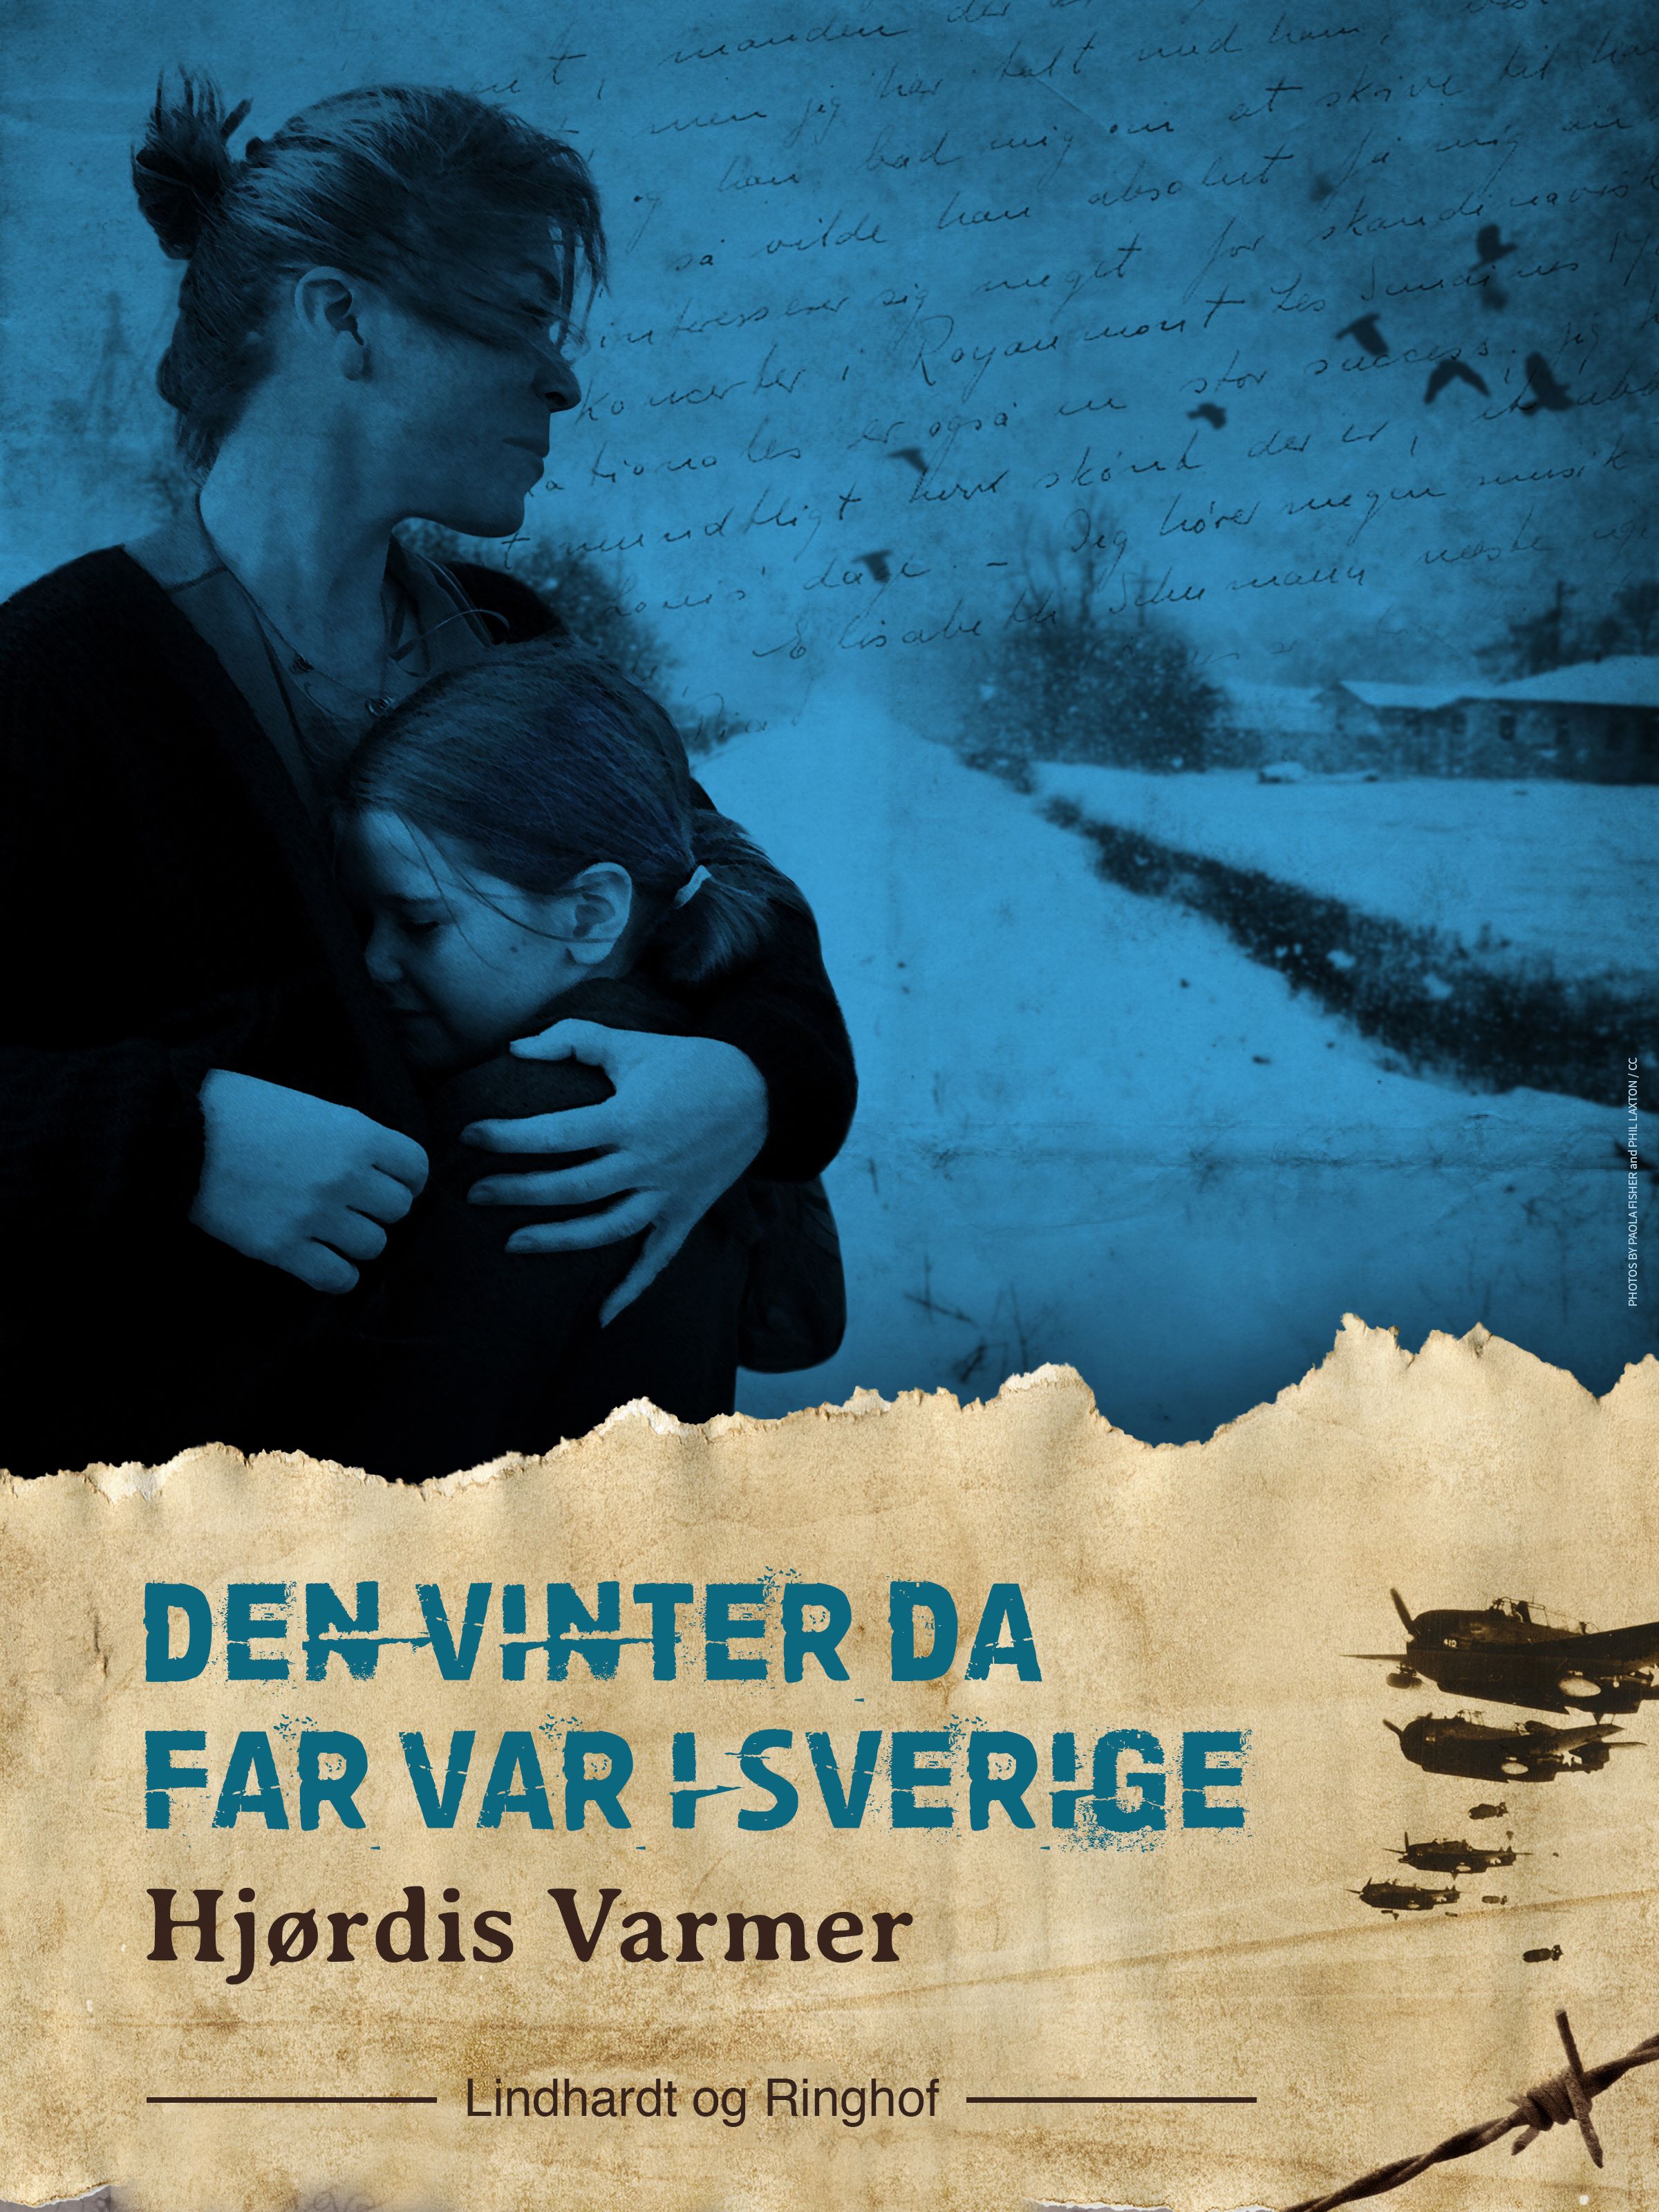 Den vinter da far var i Sverige (2. del af serie), ljudbok av Hjørdis Varmer